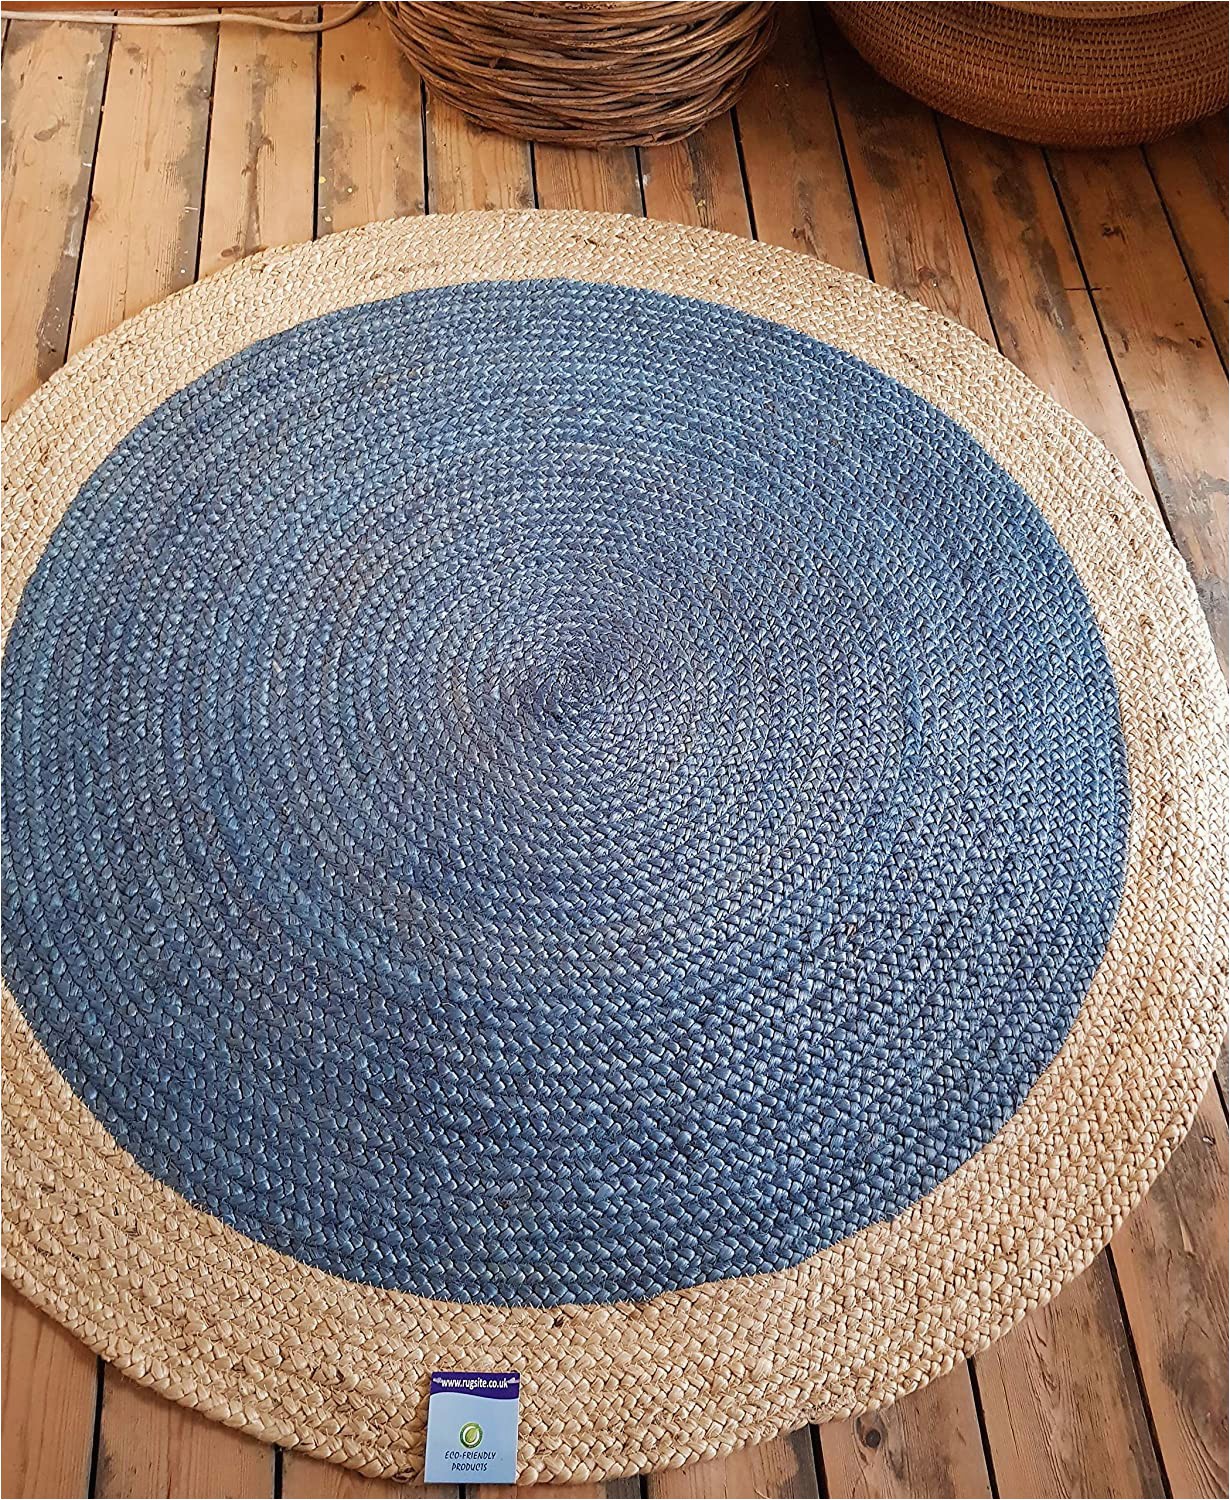 Round Blue Jute Rug 120x120cm Round Circular Blue with Beige Natural Jute Circle